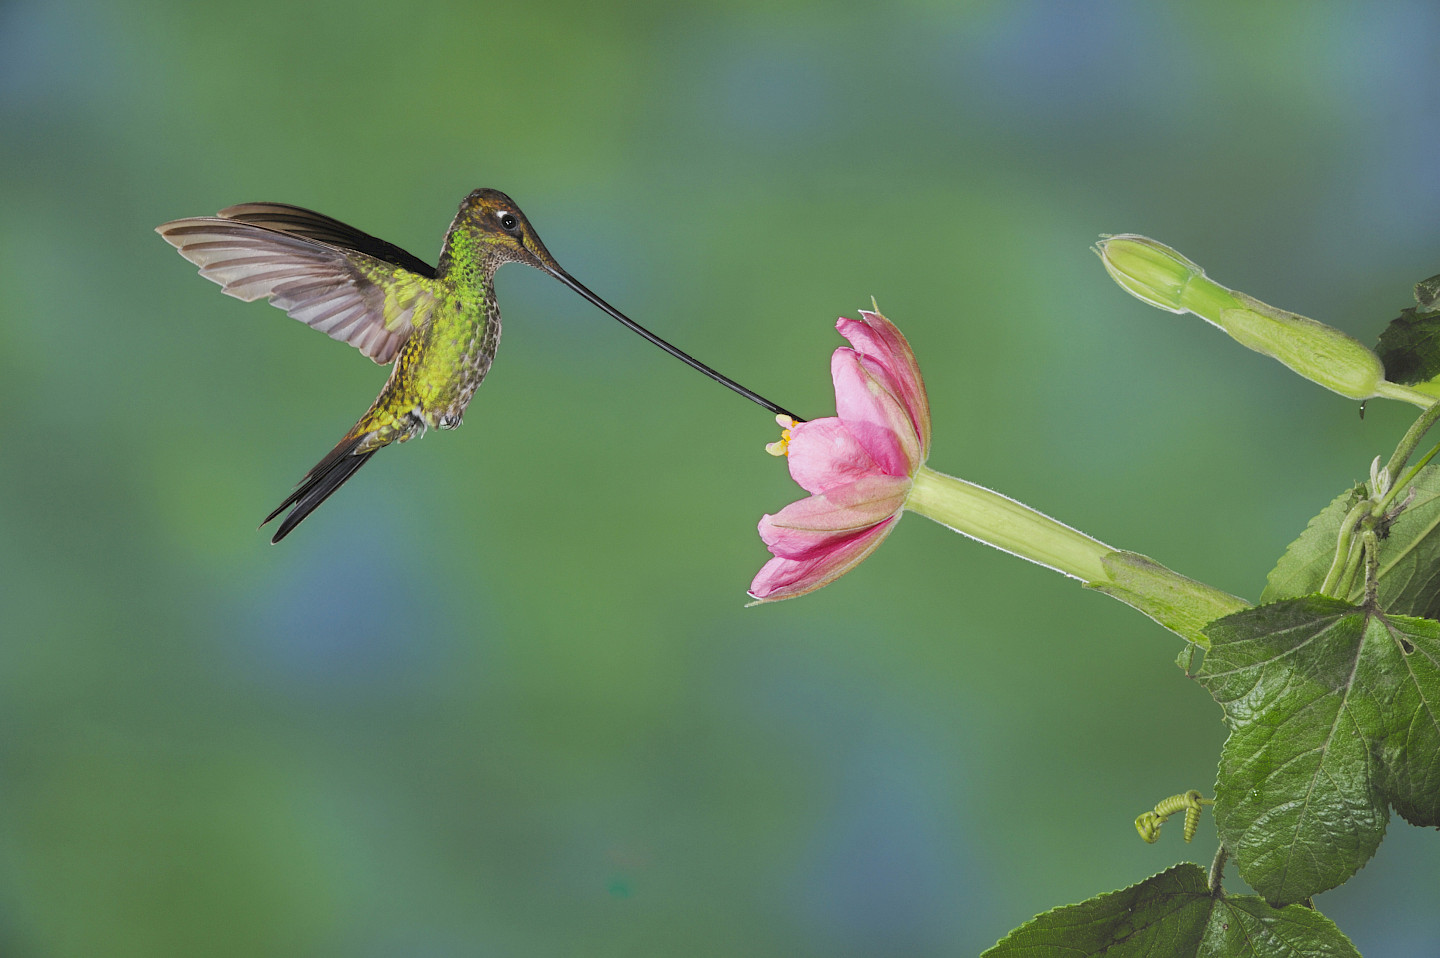 Sword-billed hummingbird during flower visit